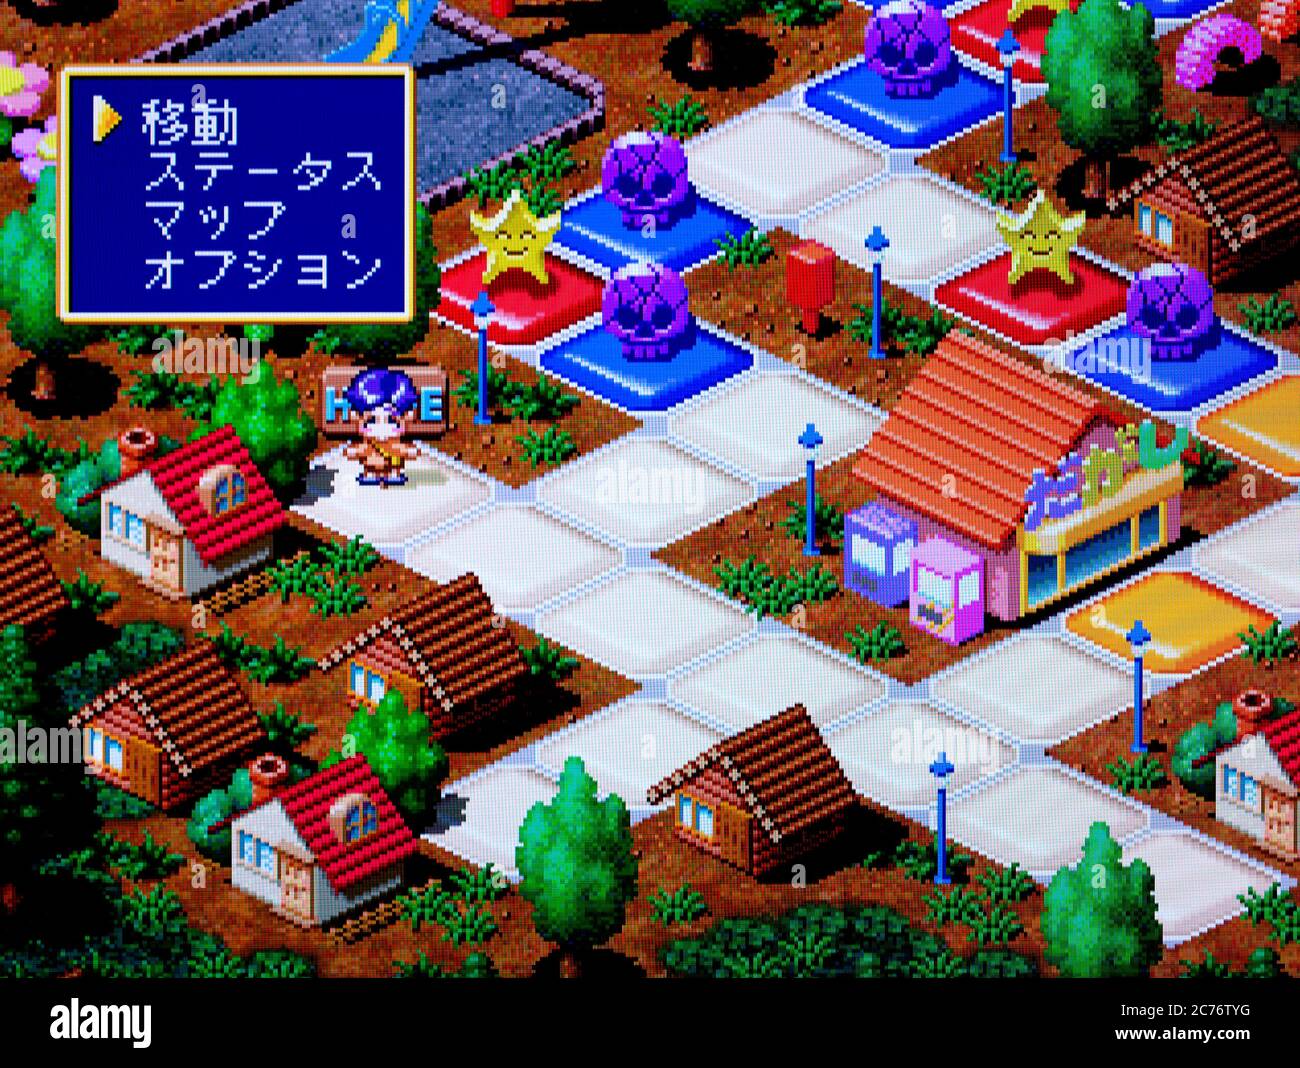 Game de Seishun - Sega Saturn Videogame - Editorial use only Stock Photo